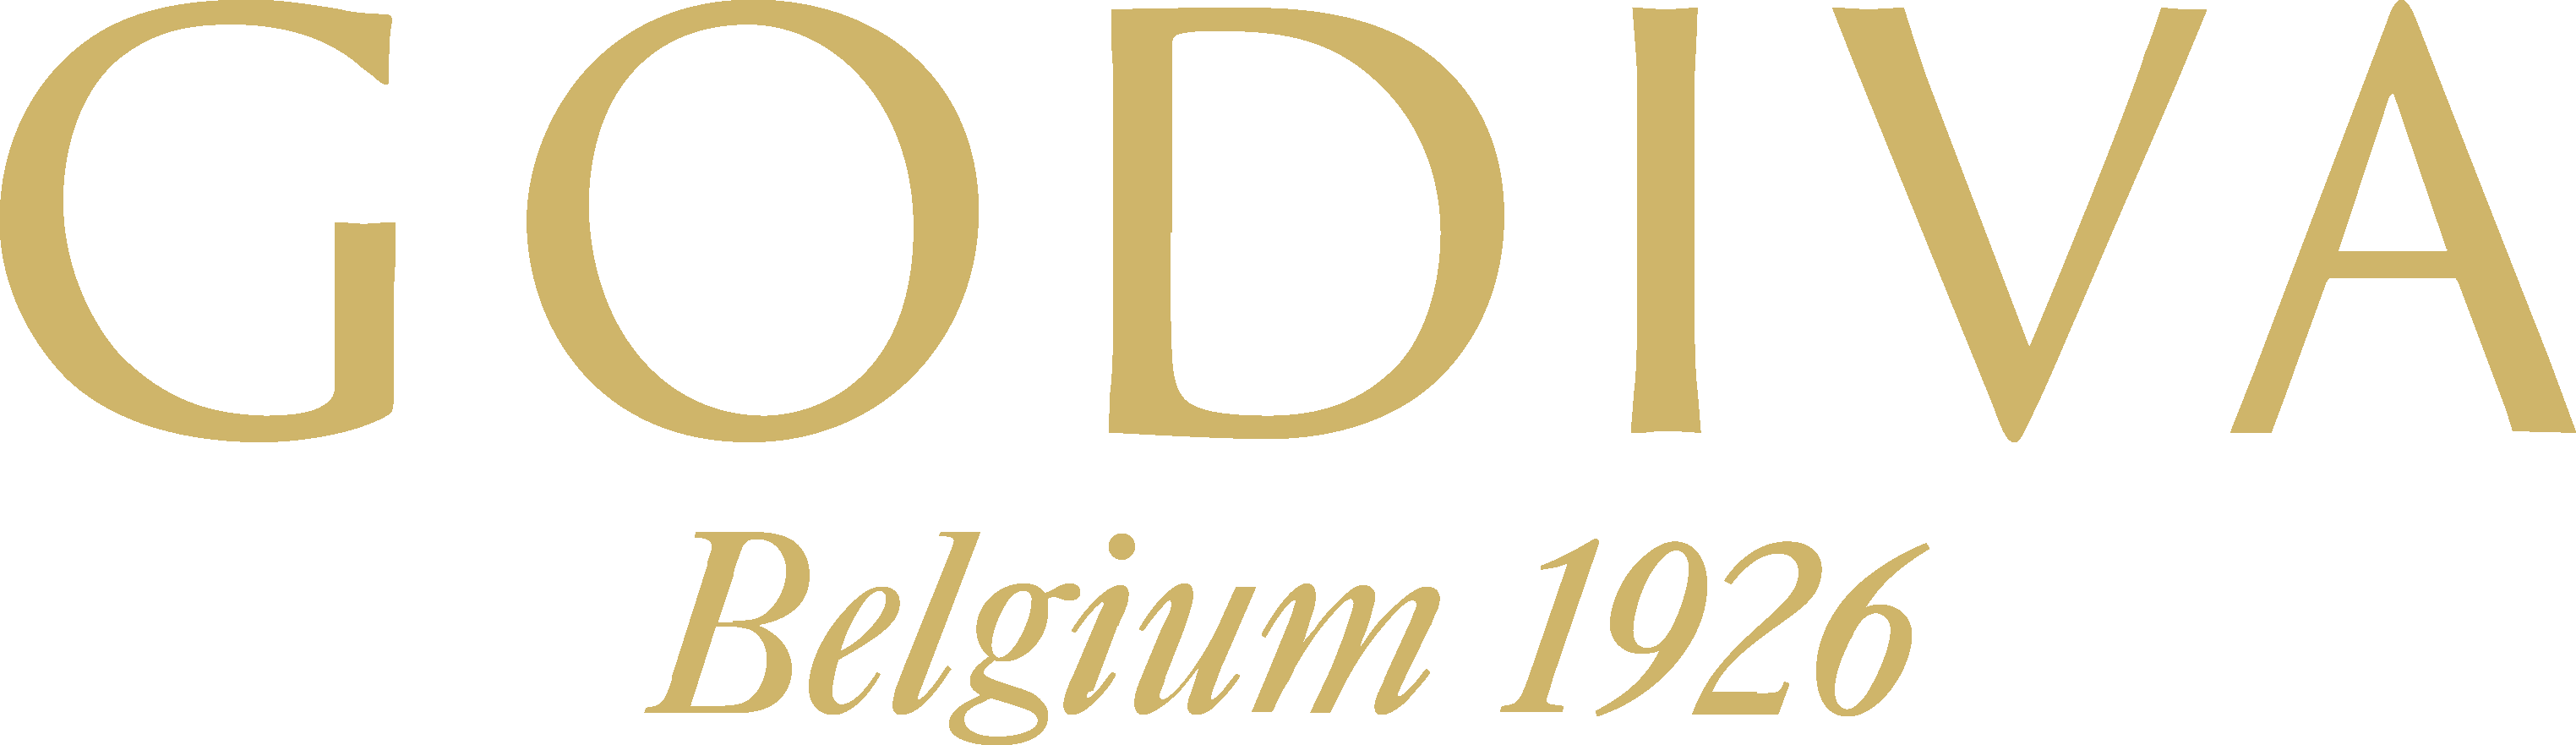 Godiva Logo png